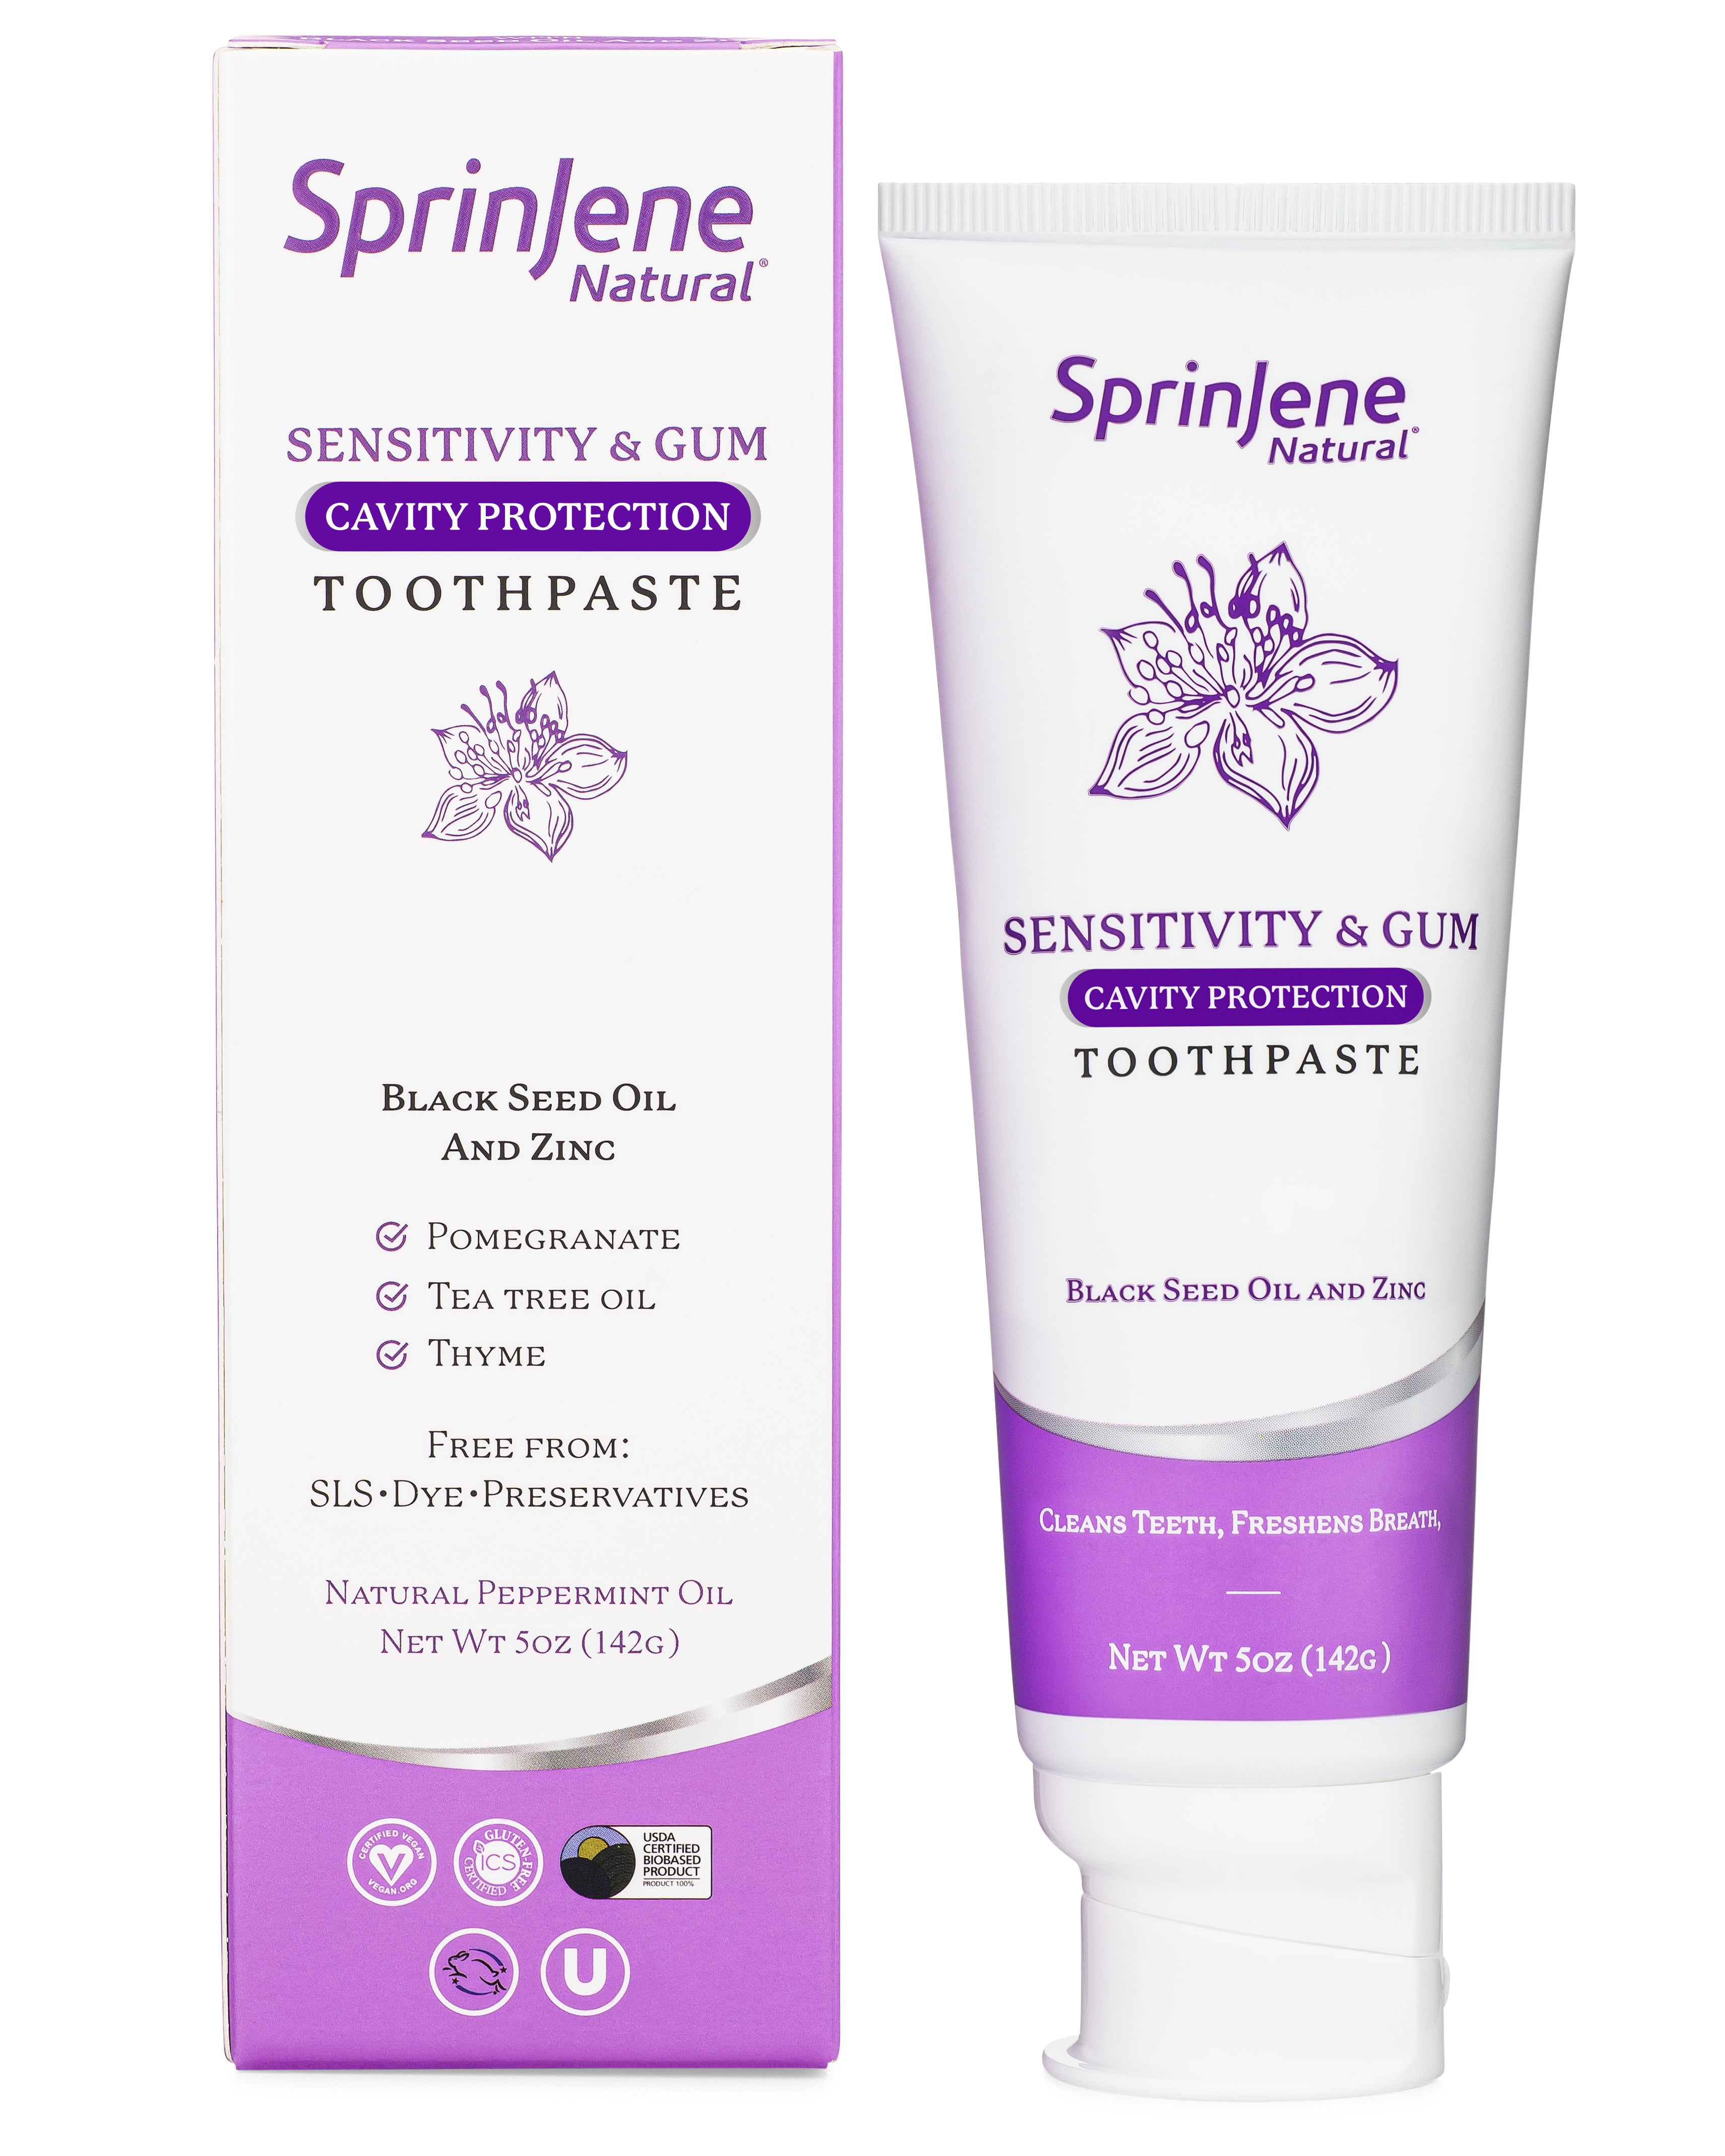 SprinJene Natural® Sensitivity & Gum Cavity Protection 5oz